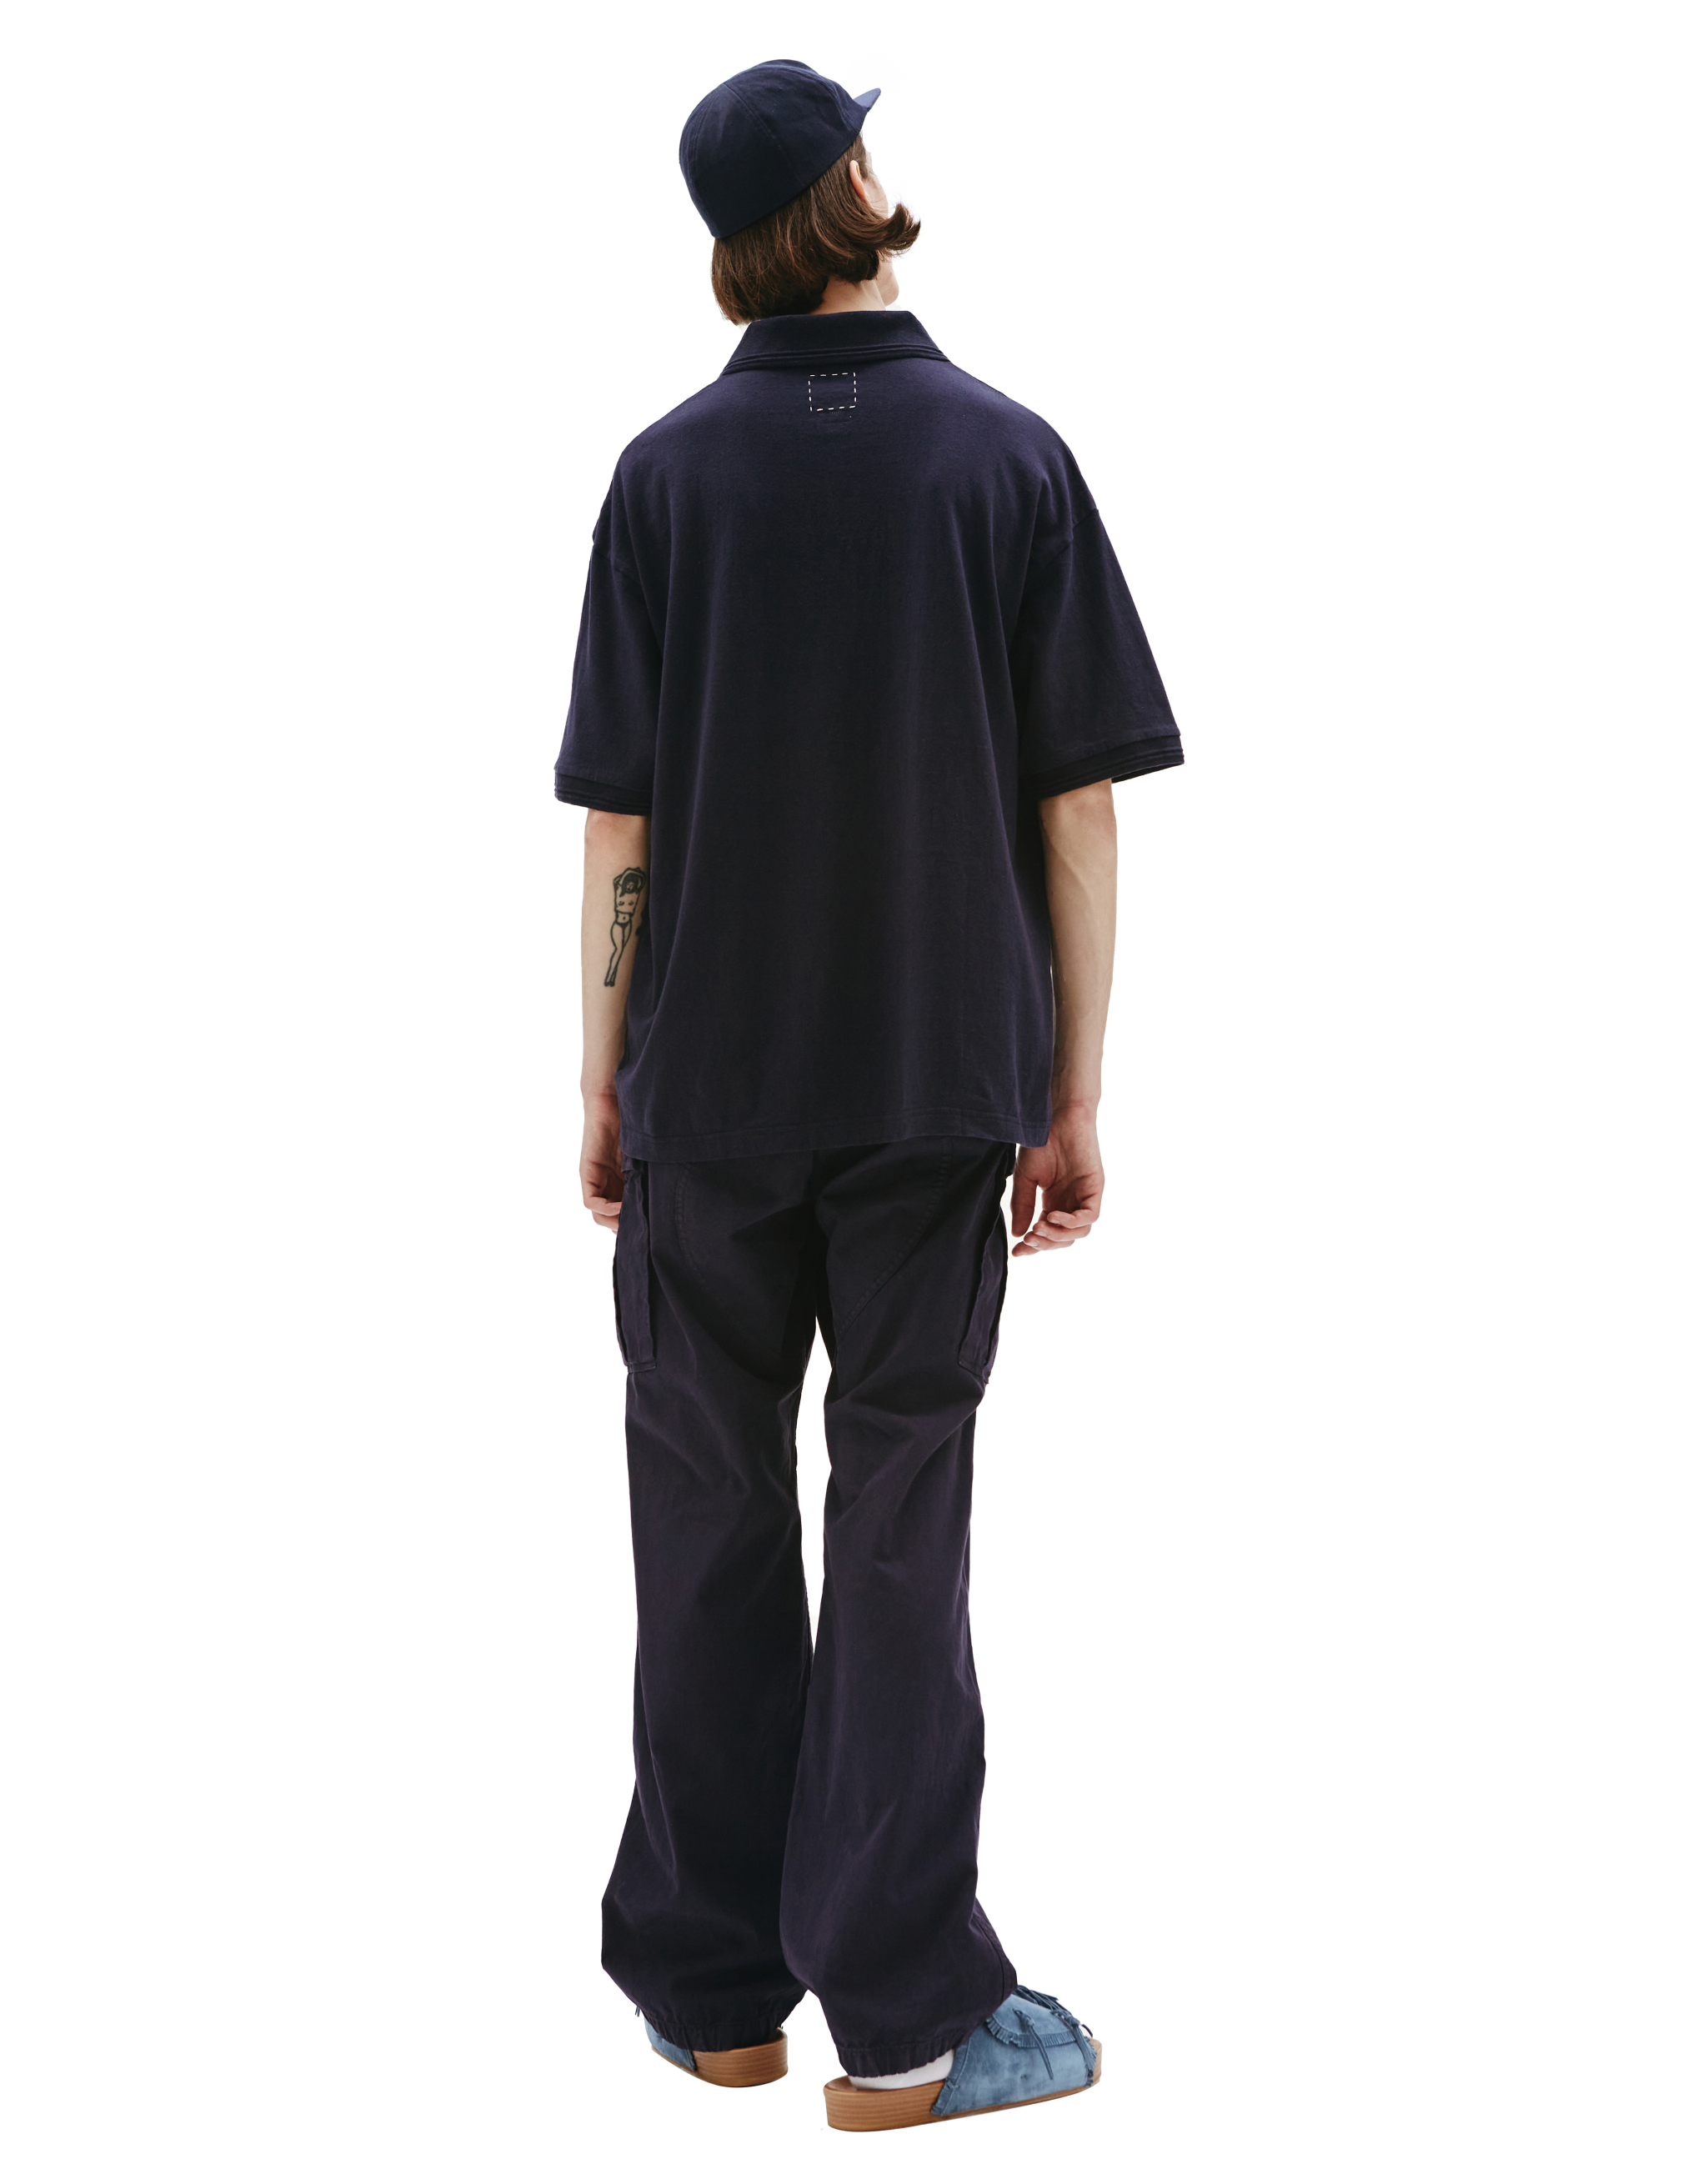 Поло Jumbo Weller с вышивкой visvim 0122105010018/navy, размер 5;4 0122105010018/navy - фото 3